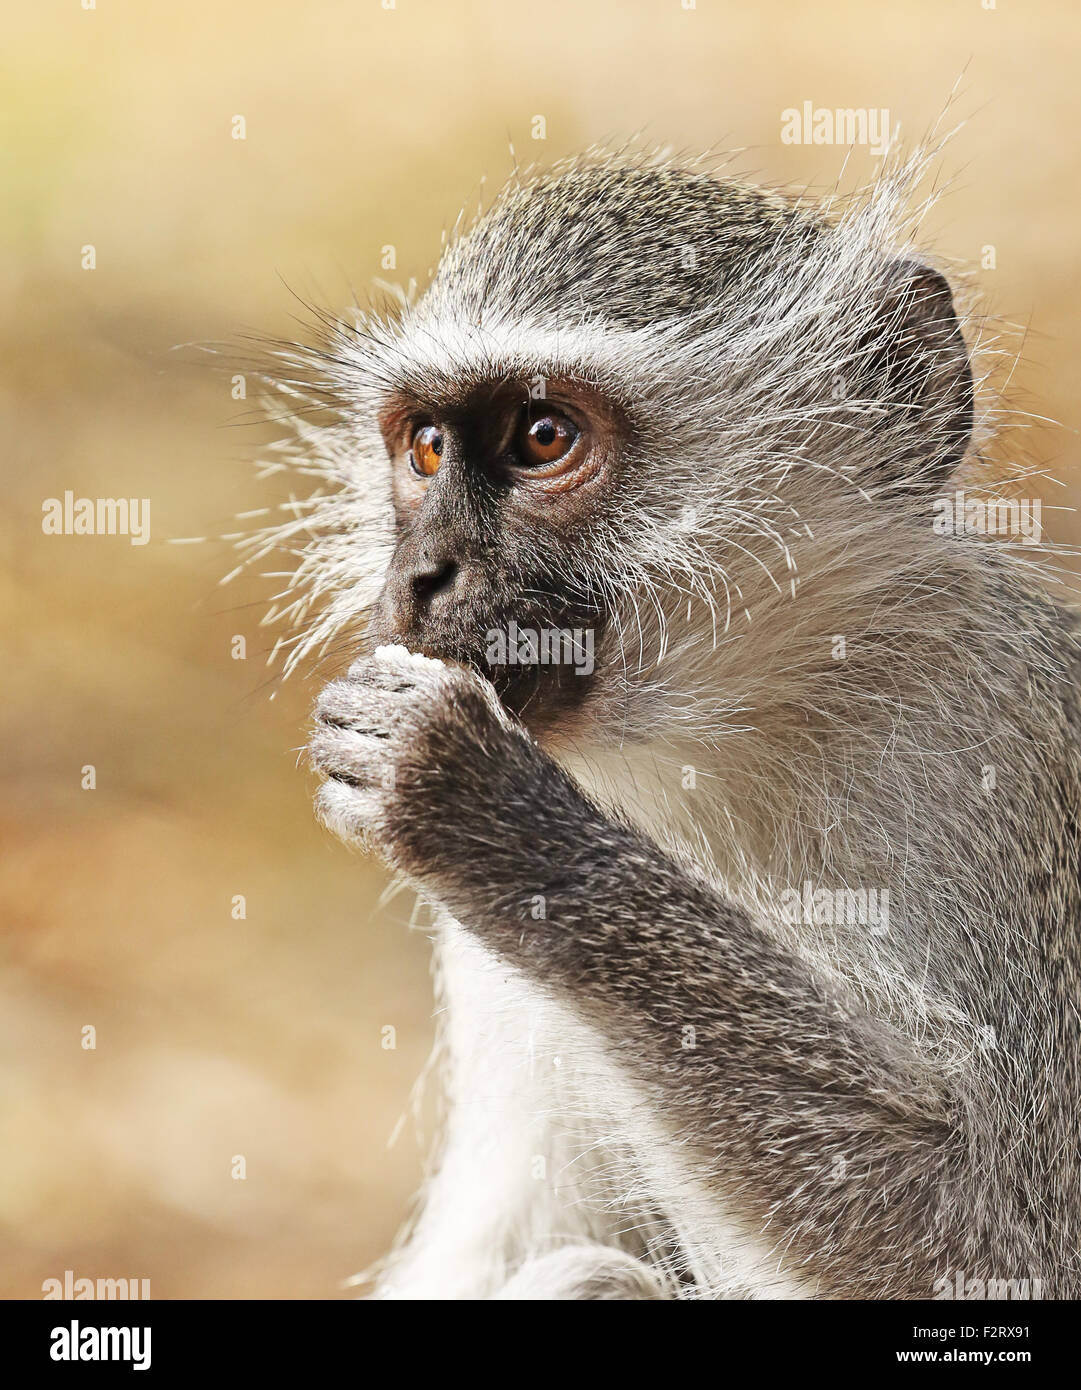 portrait of a Velvet monkey in Kruger National Park, South Africa. Stock Photo